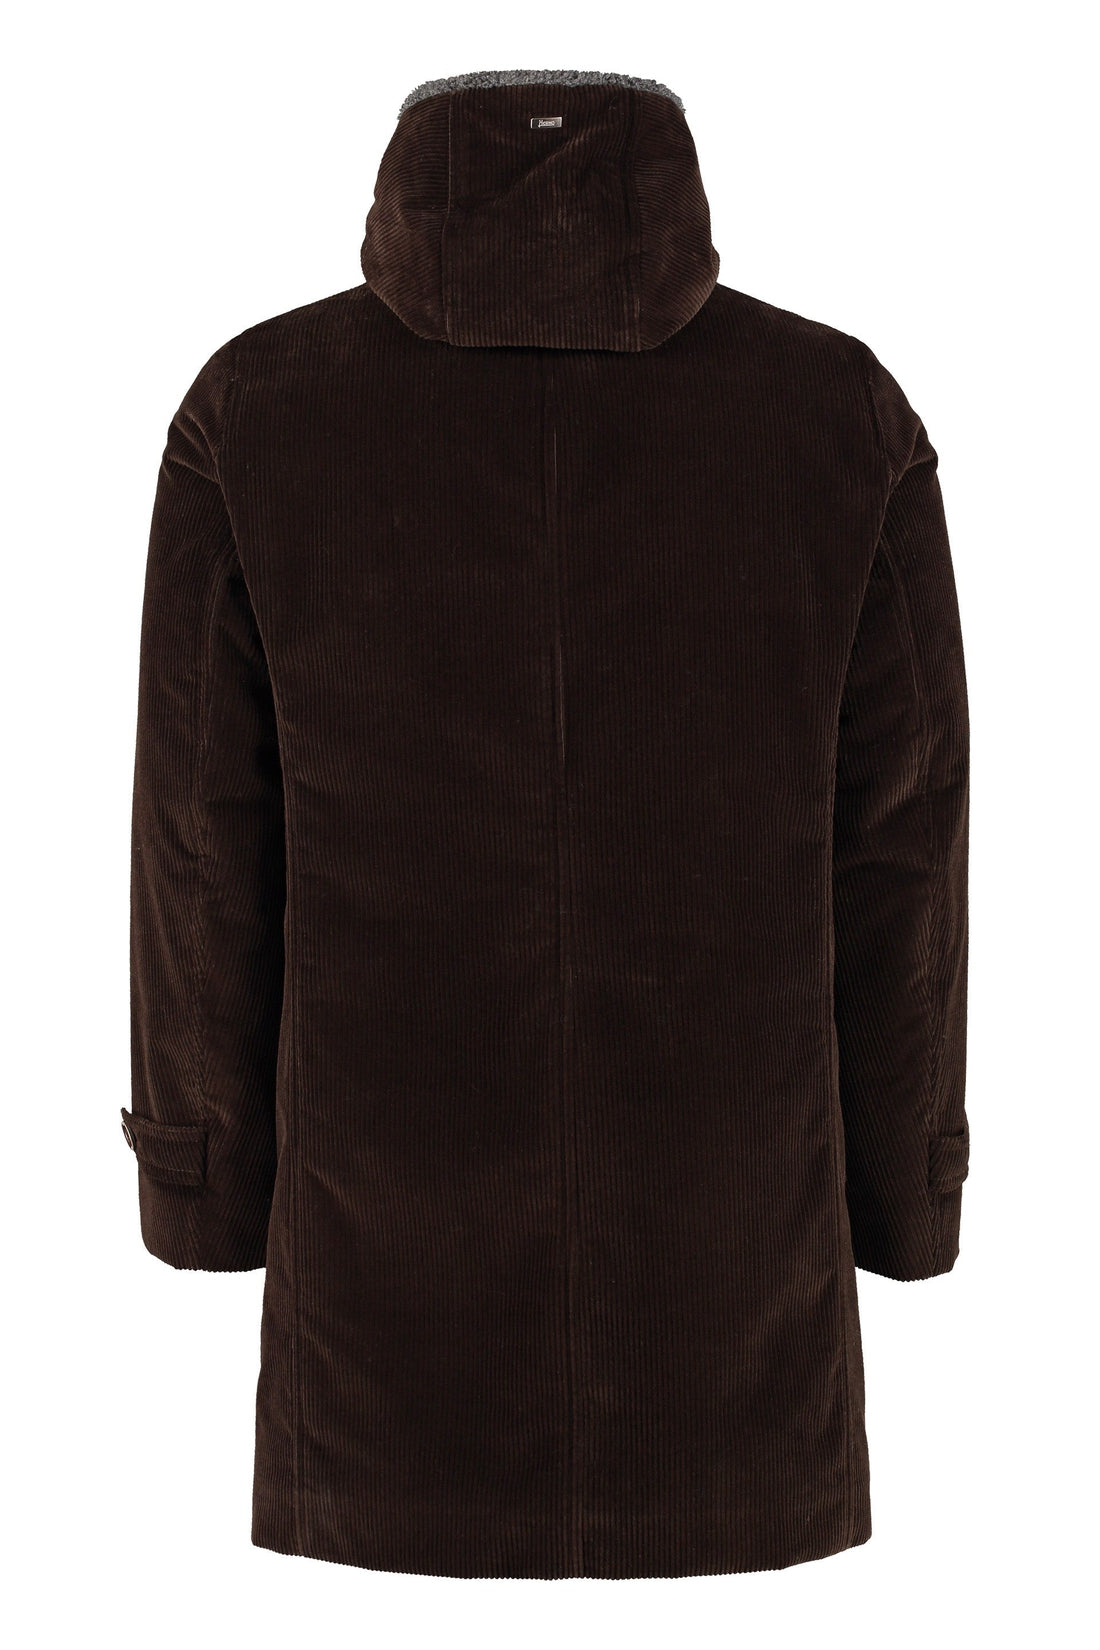 Herno-OUTLET-SALE-Corduroy coat-ARCHIVIST